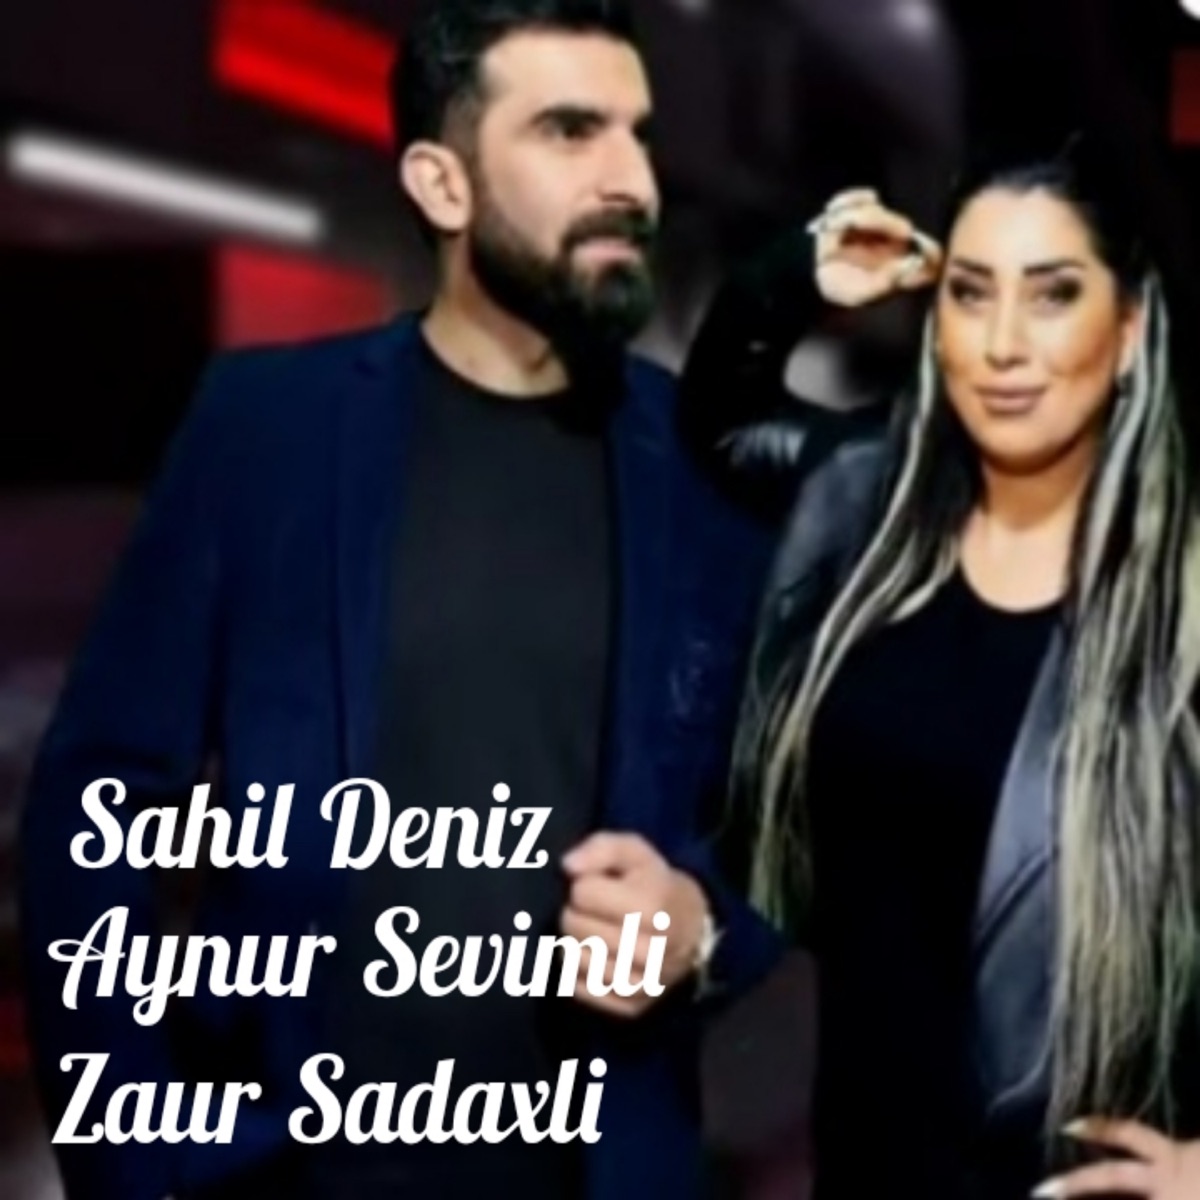 Sen Menim Olsan (feat. Vuqar Seda) by Aynur Sevimli & Vuqar Seda on Apple  Music